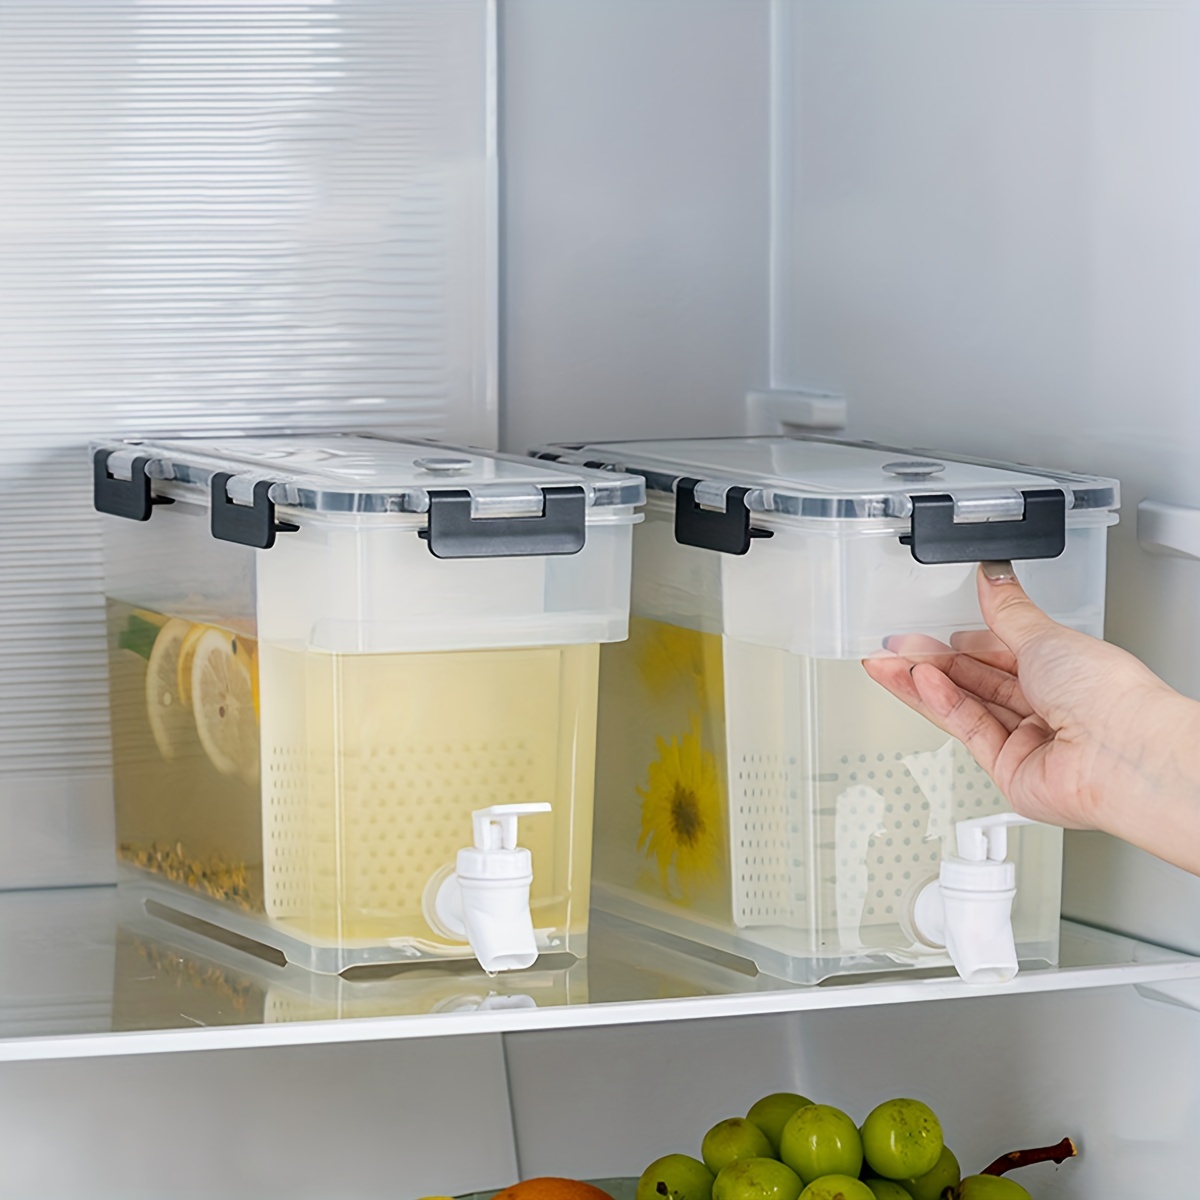 Beverage Dispenser 5L Container Juice Bucket for Home Fridge Lemonade Clear  